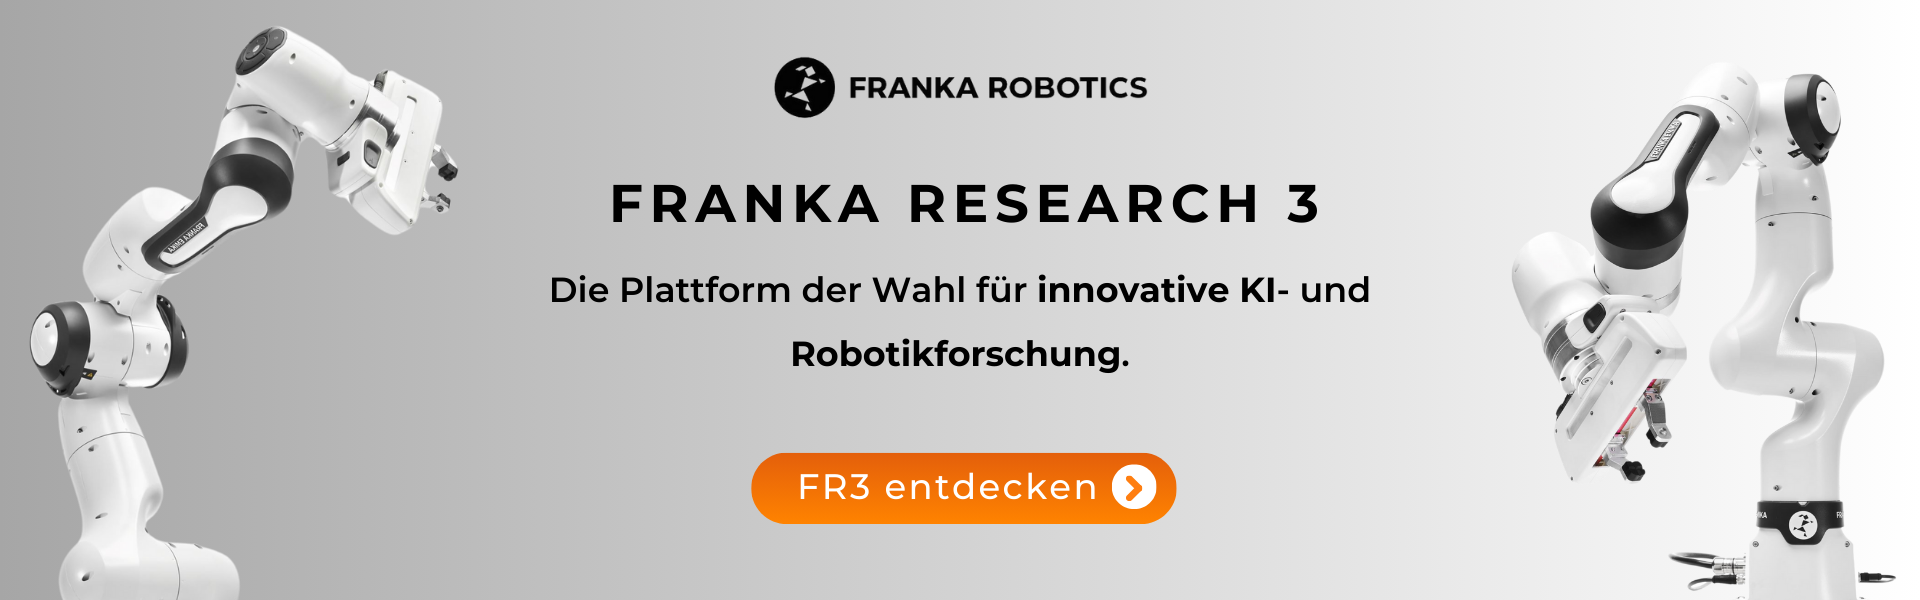 Franka Research 3 Banner